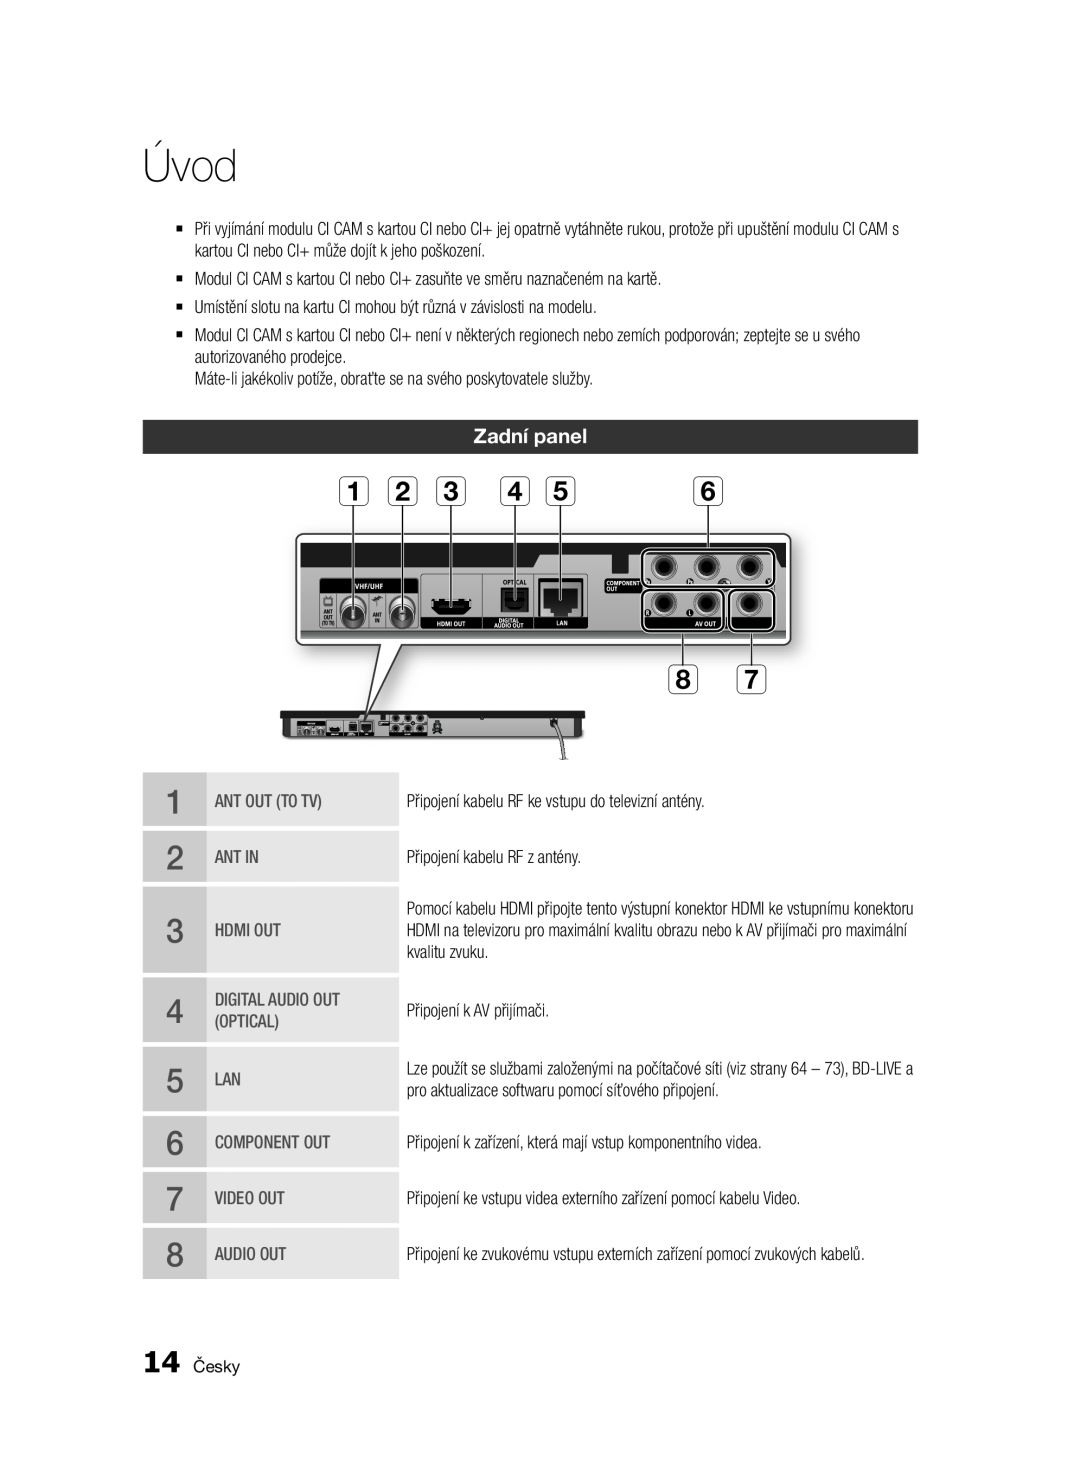 Samsung BD-E6300/EN manual a b c d e, Zadní panel, Úvod 